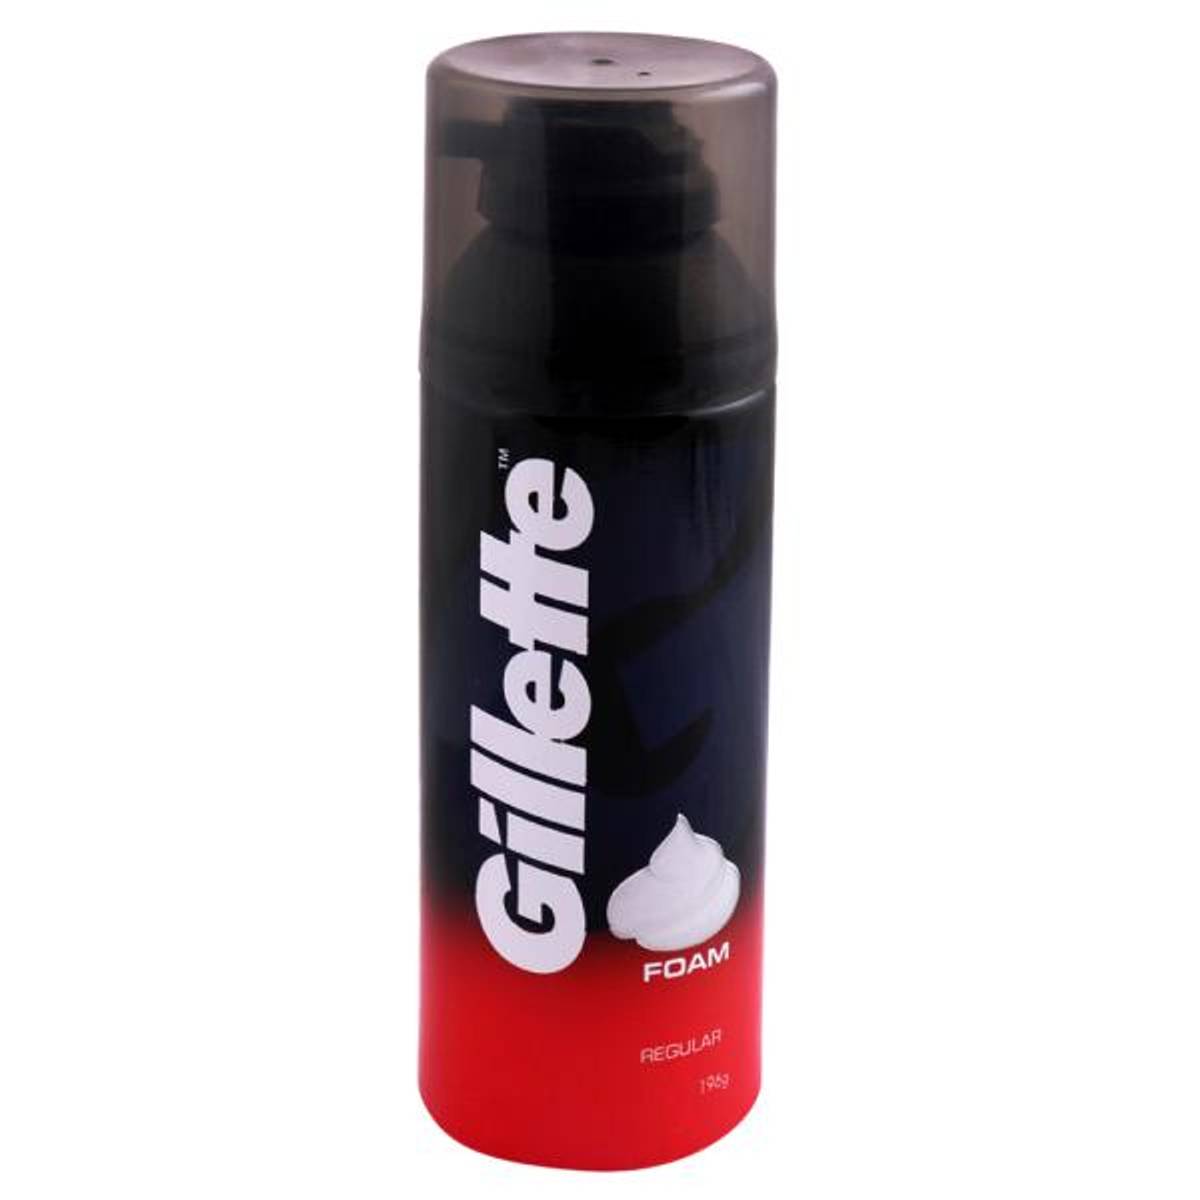 Gillette Foam Regular 196gm